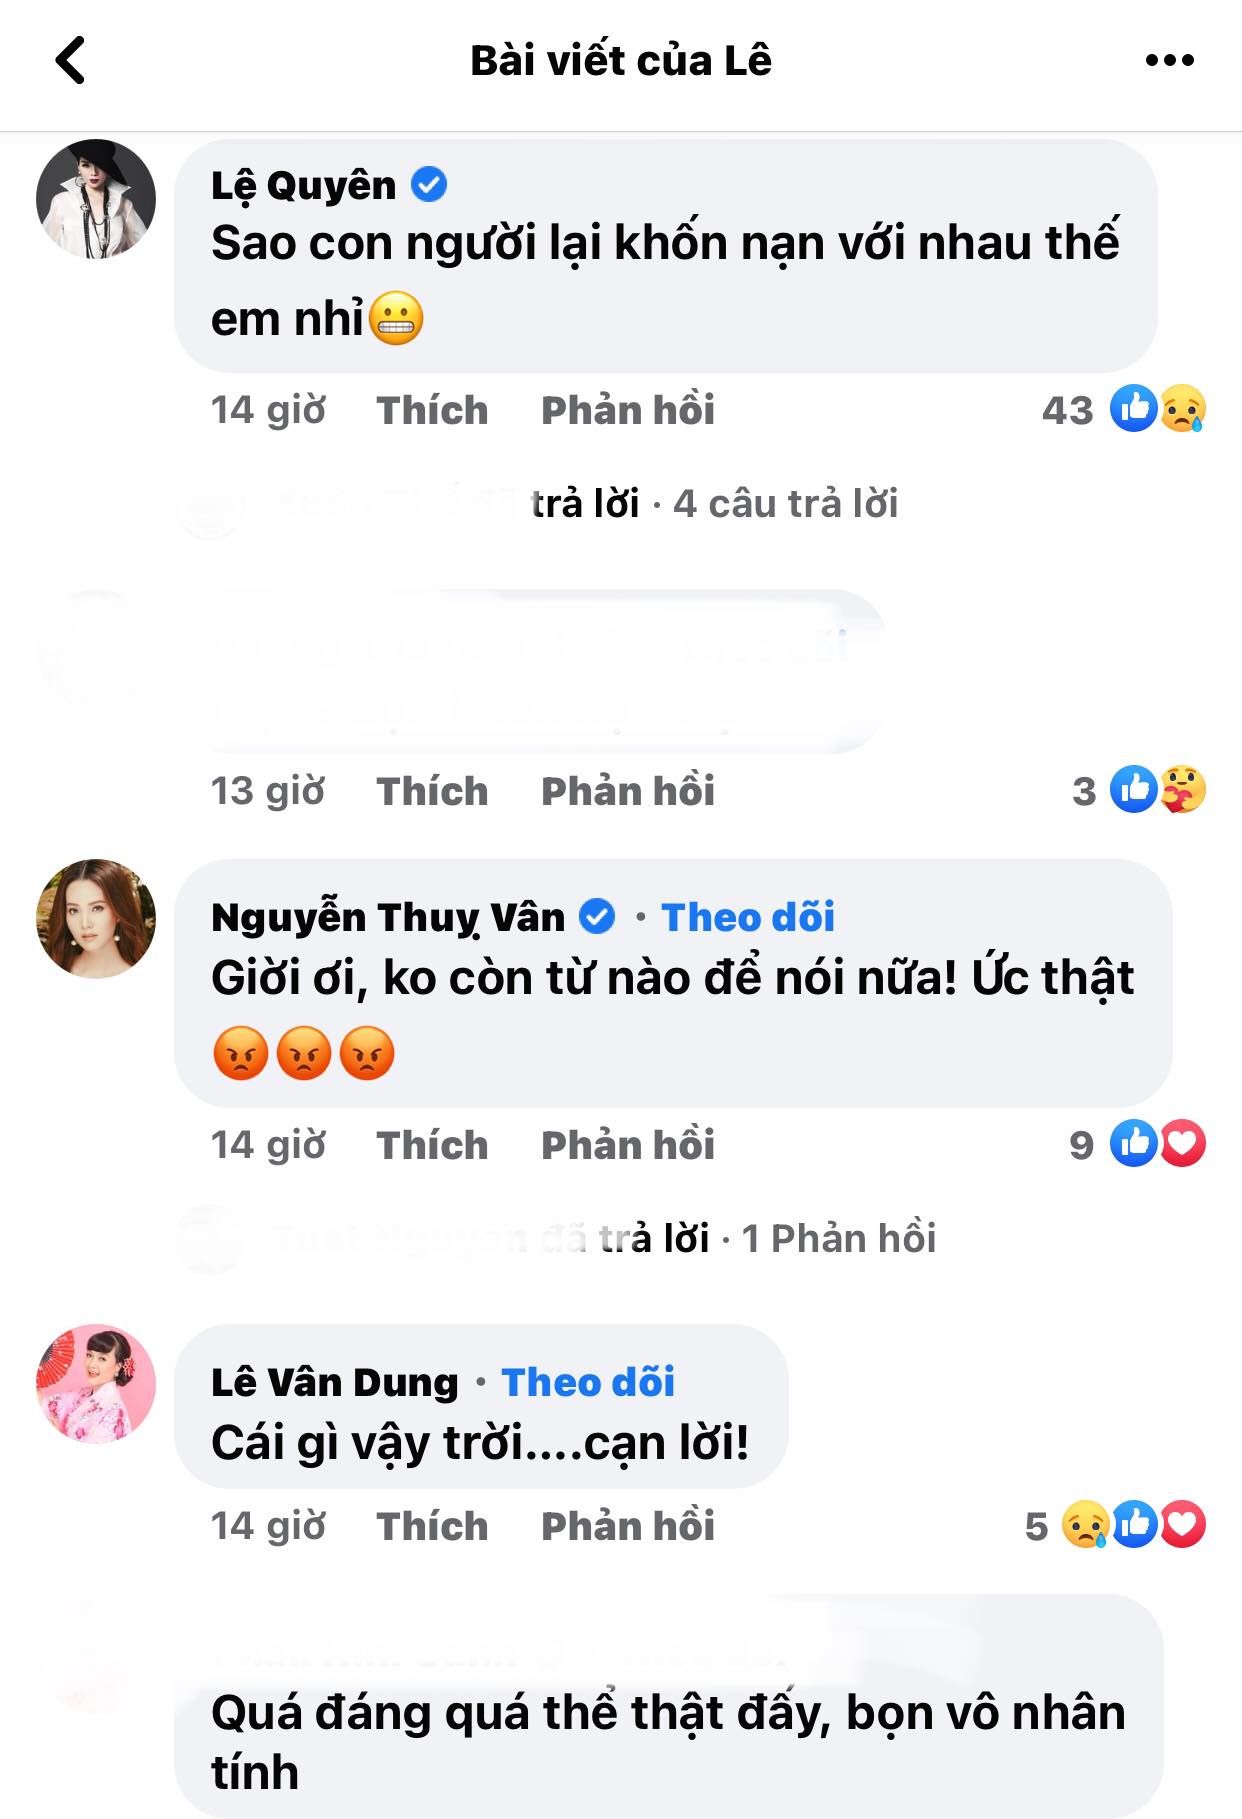 Thuc-hu-thong-tin-ns-cong-ly-qua-doi-khien-le-quyen-van-dung-cung-dan-sao-Viet-xon-xao-2